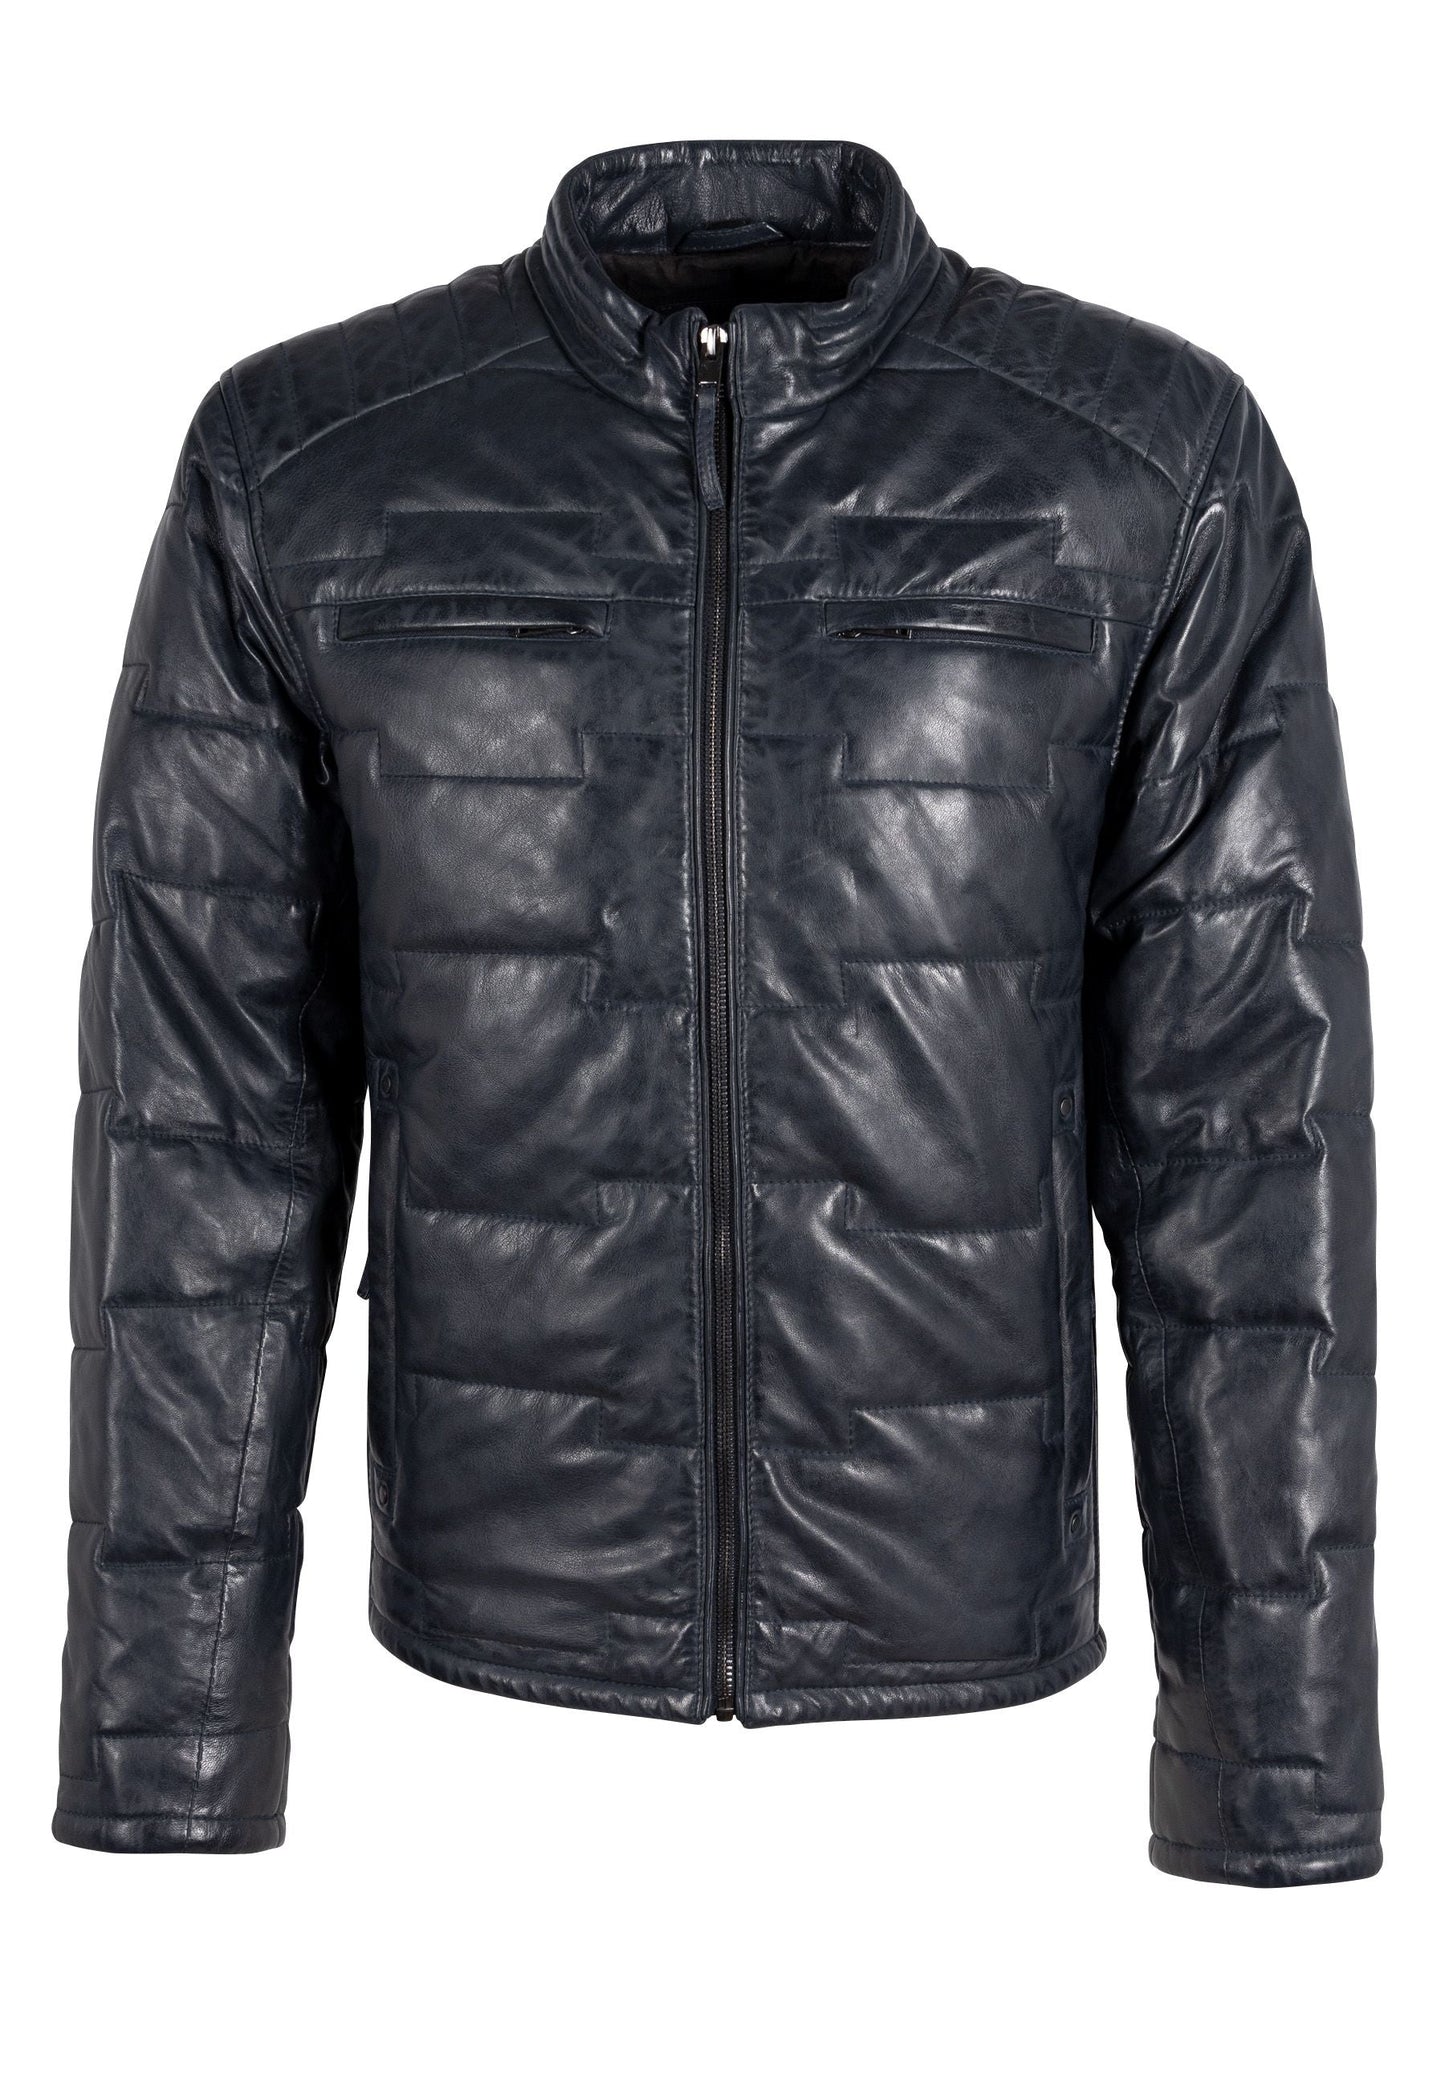 Aplin CF Leather Jacket, Navy